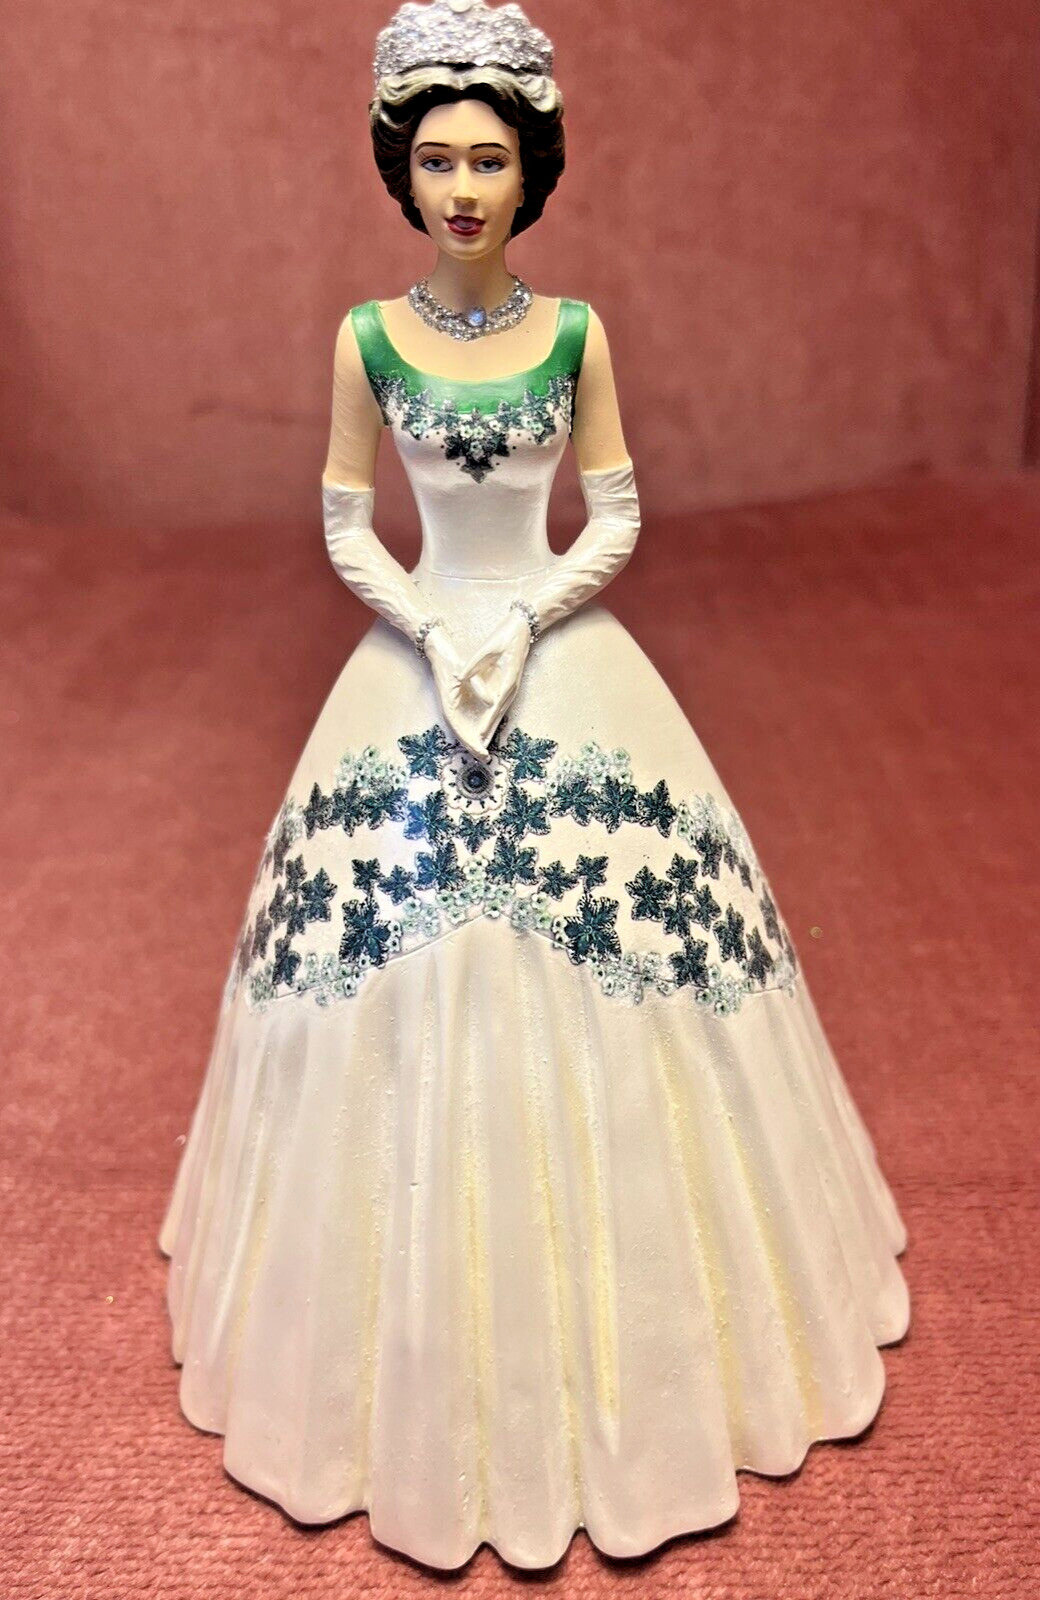 Queen Elizabeth II Figurine Wearing the Maple Leaf of Canada Dress Figurine 2013